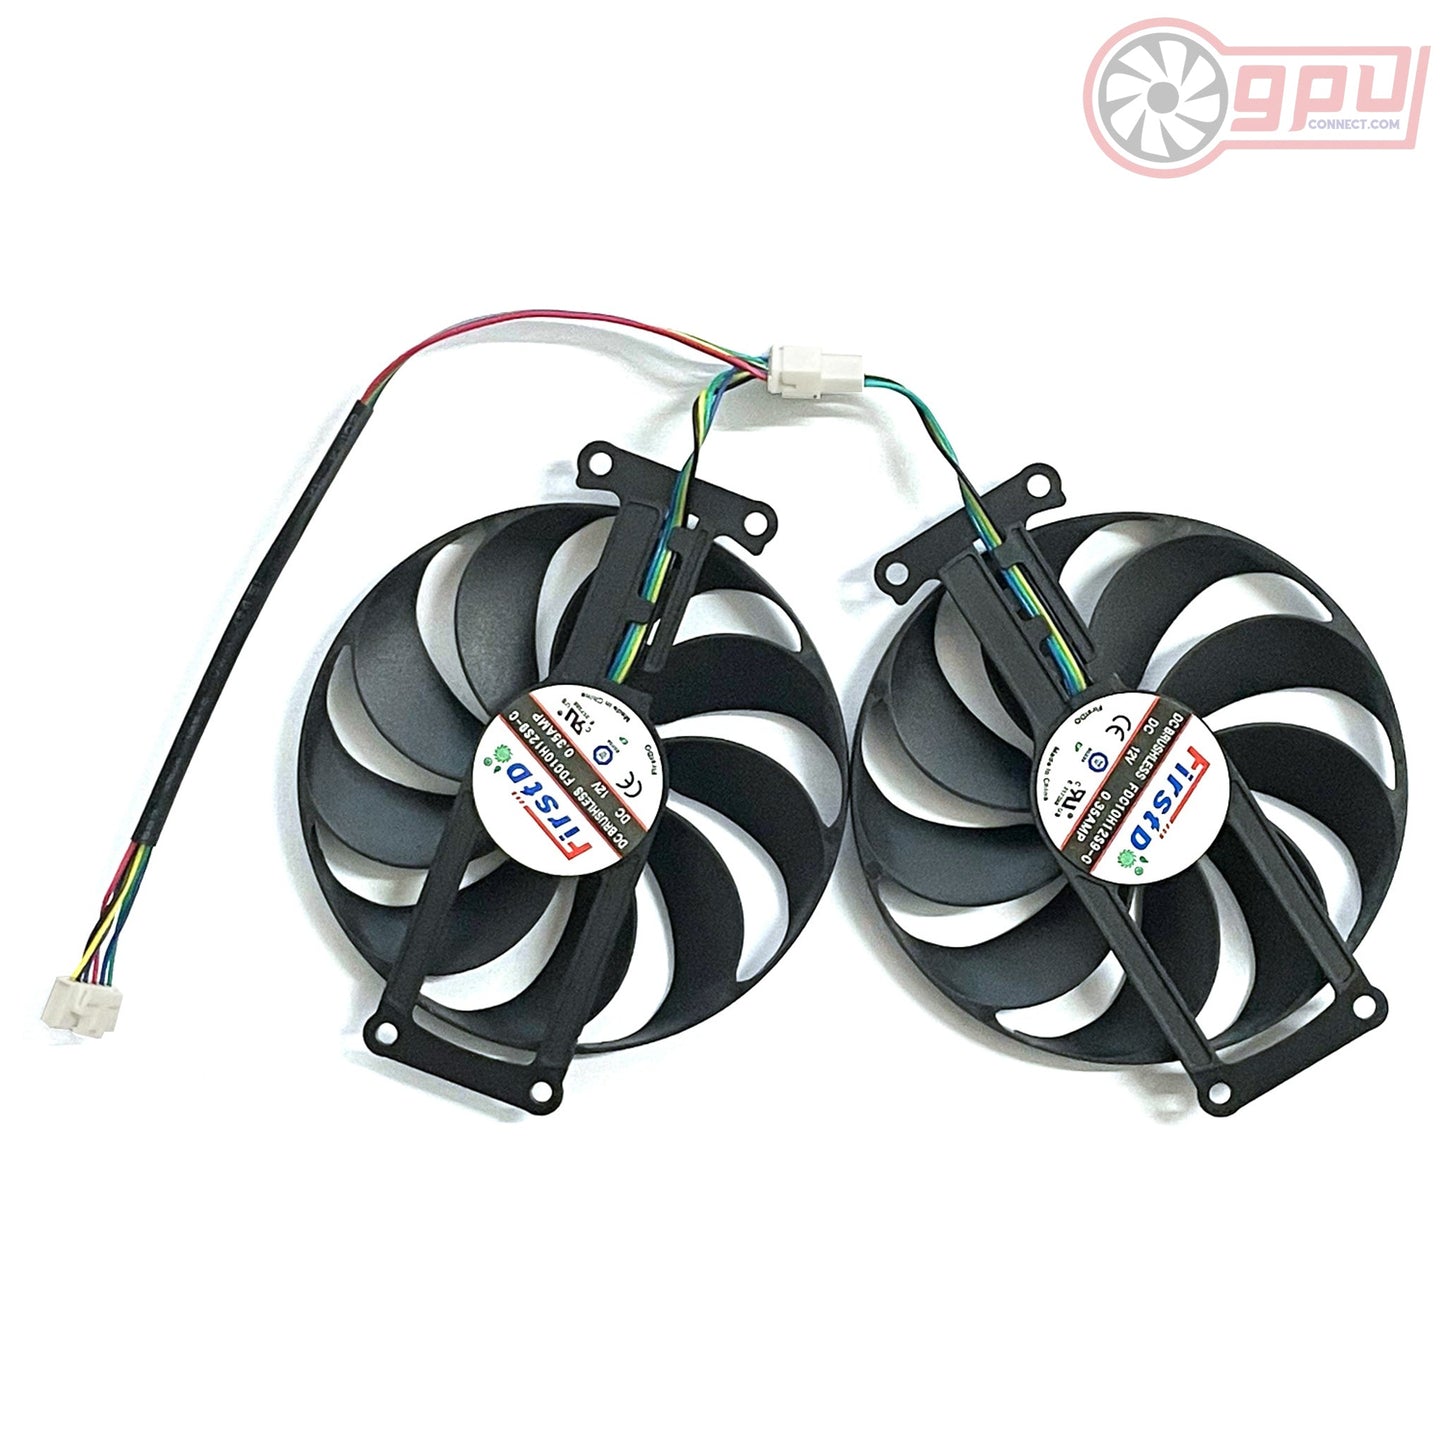 ASUS RTX 2060 2070 GTX 1660 DUAL EVO - Replacement GPU Cooling Fan Set - GPUCONNECT.COM